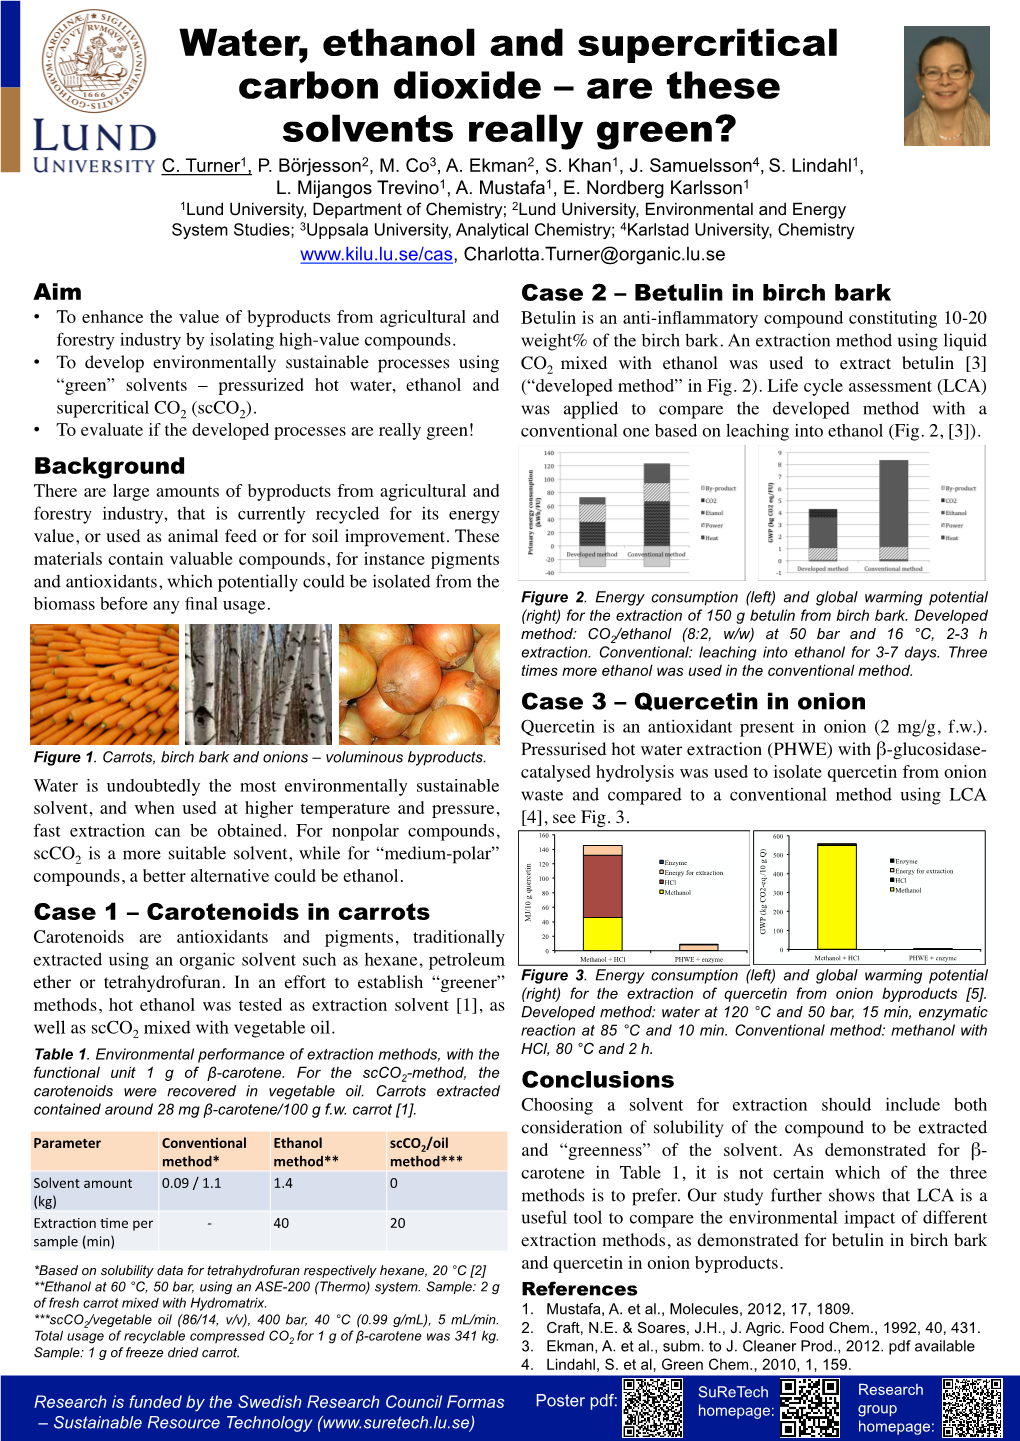 Carotenoids in Carrots Case 2 – Betulin in Birch Bark Conclusions